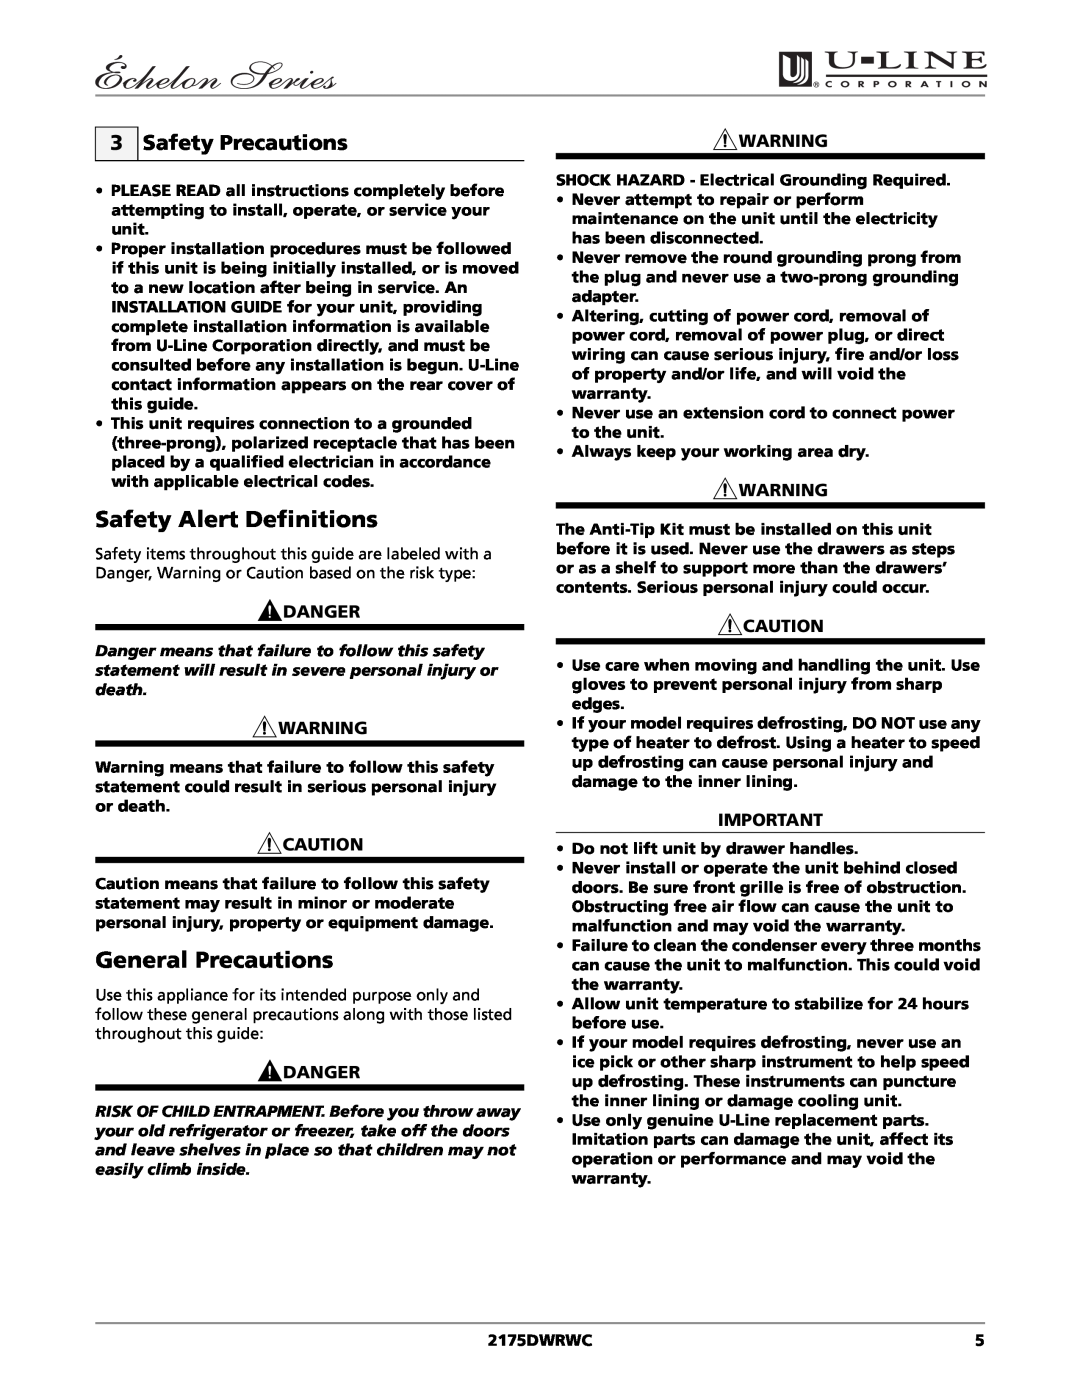 U-Line 2175DWRWC manual Safety Alert Definitions, General Precautions, 3Safety Precautions, Danger 